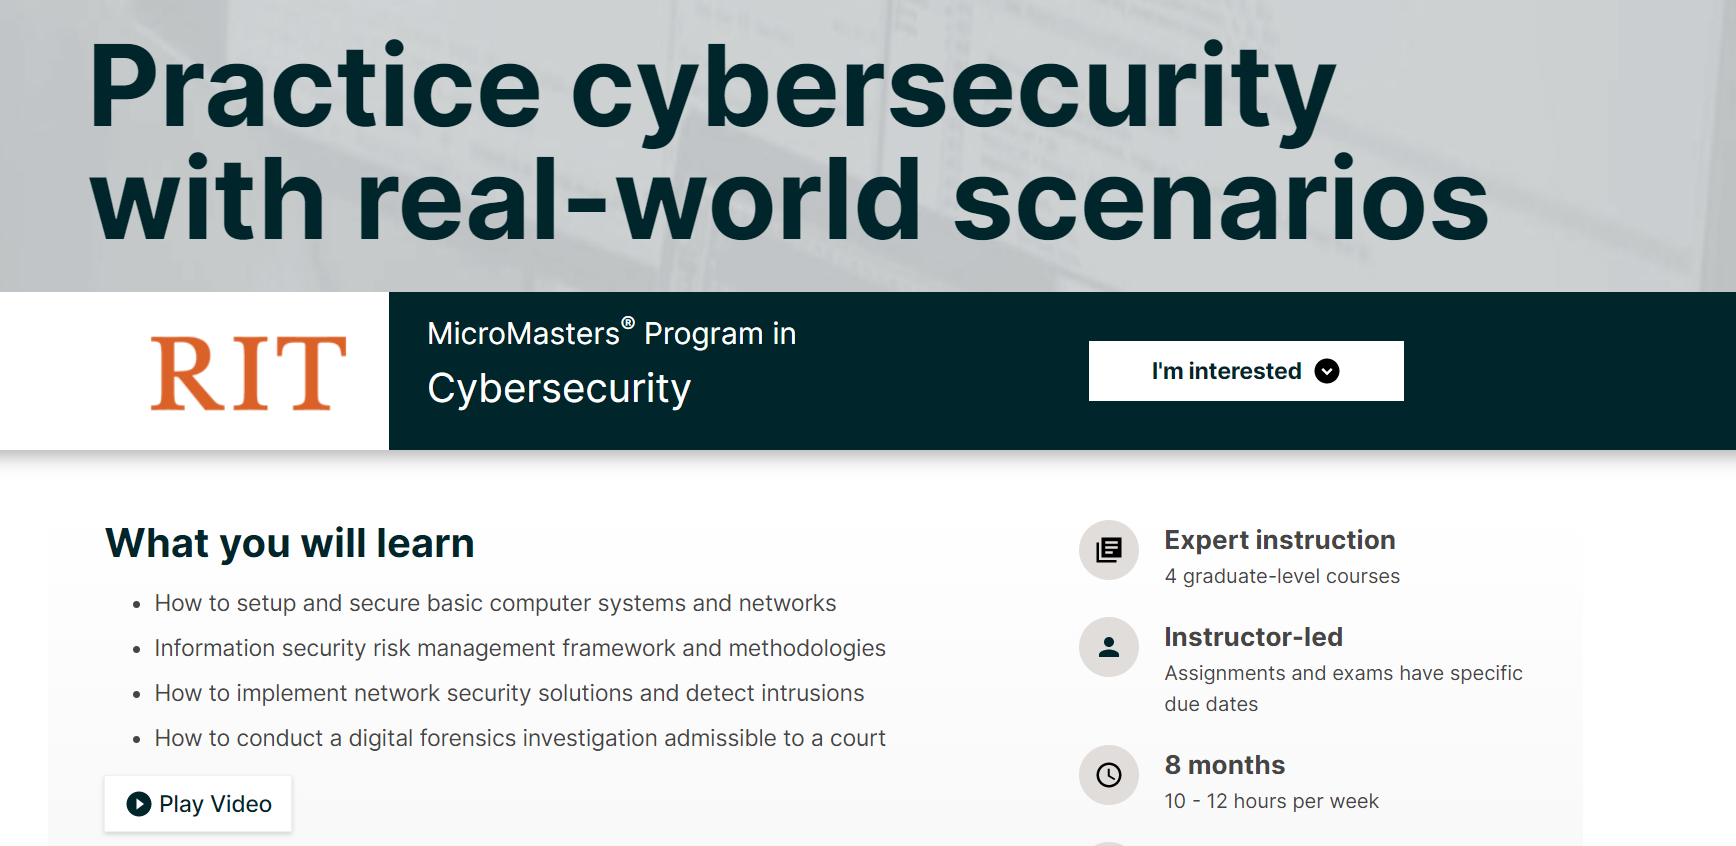 MicroMasters® Program in Cybersecurity by RIT (edX)